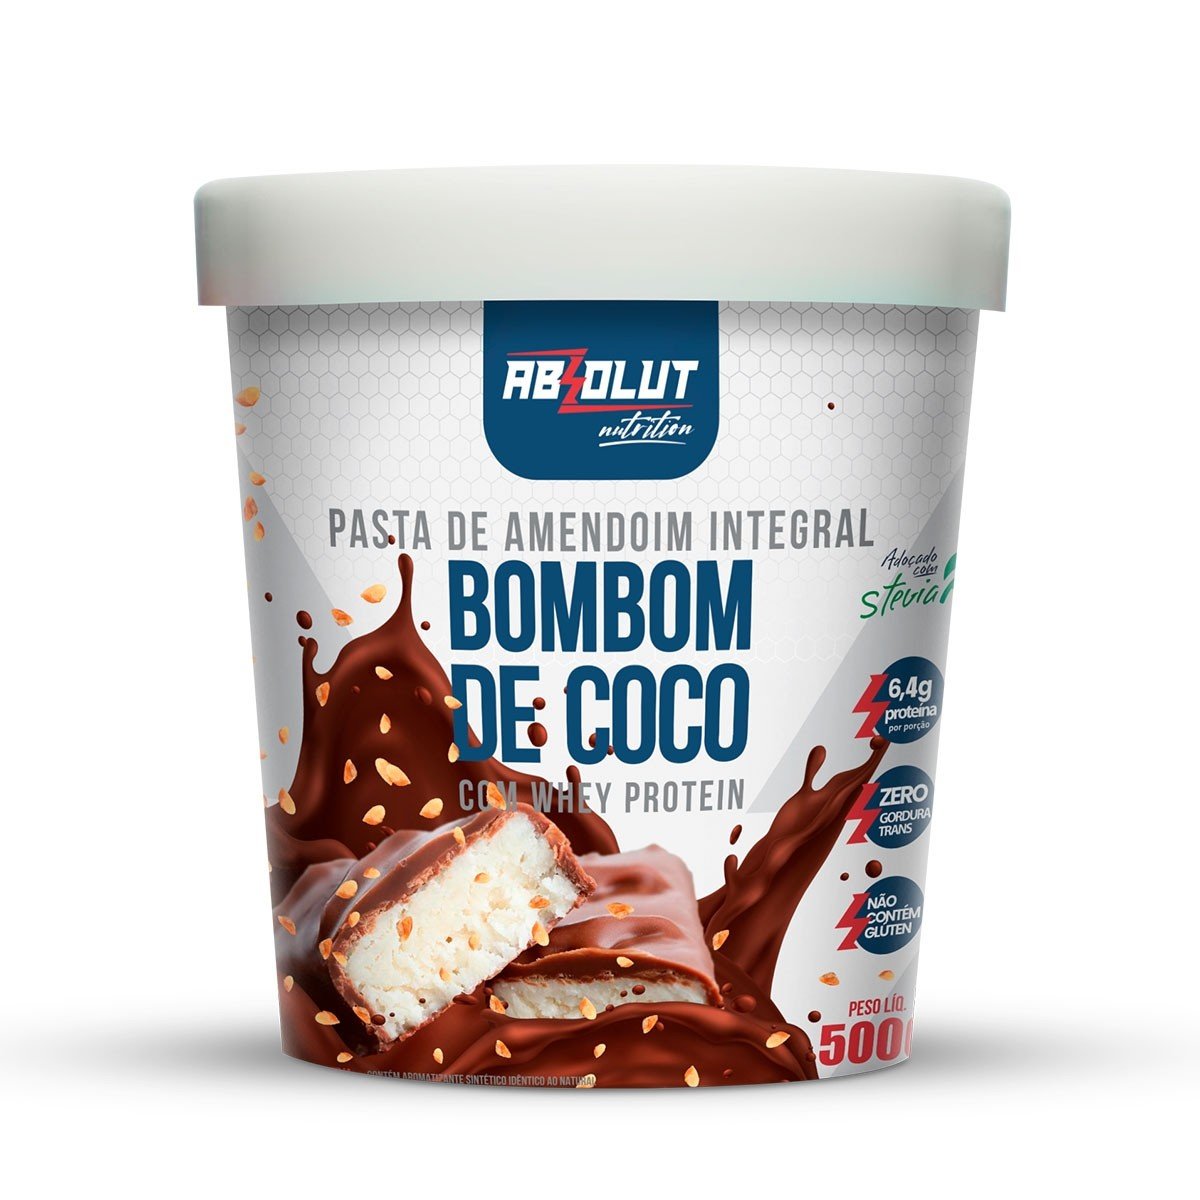 https://www.drogariaminasbrasil.com.br/media/product/446/pasta-de-amendoim-integral-bombom-de-coco-com-whey-protein-500g-absolut-nutrition-dea.jpg